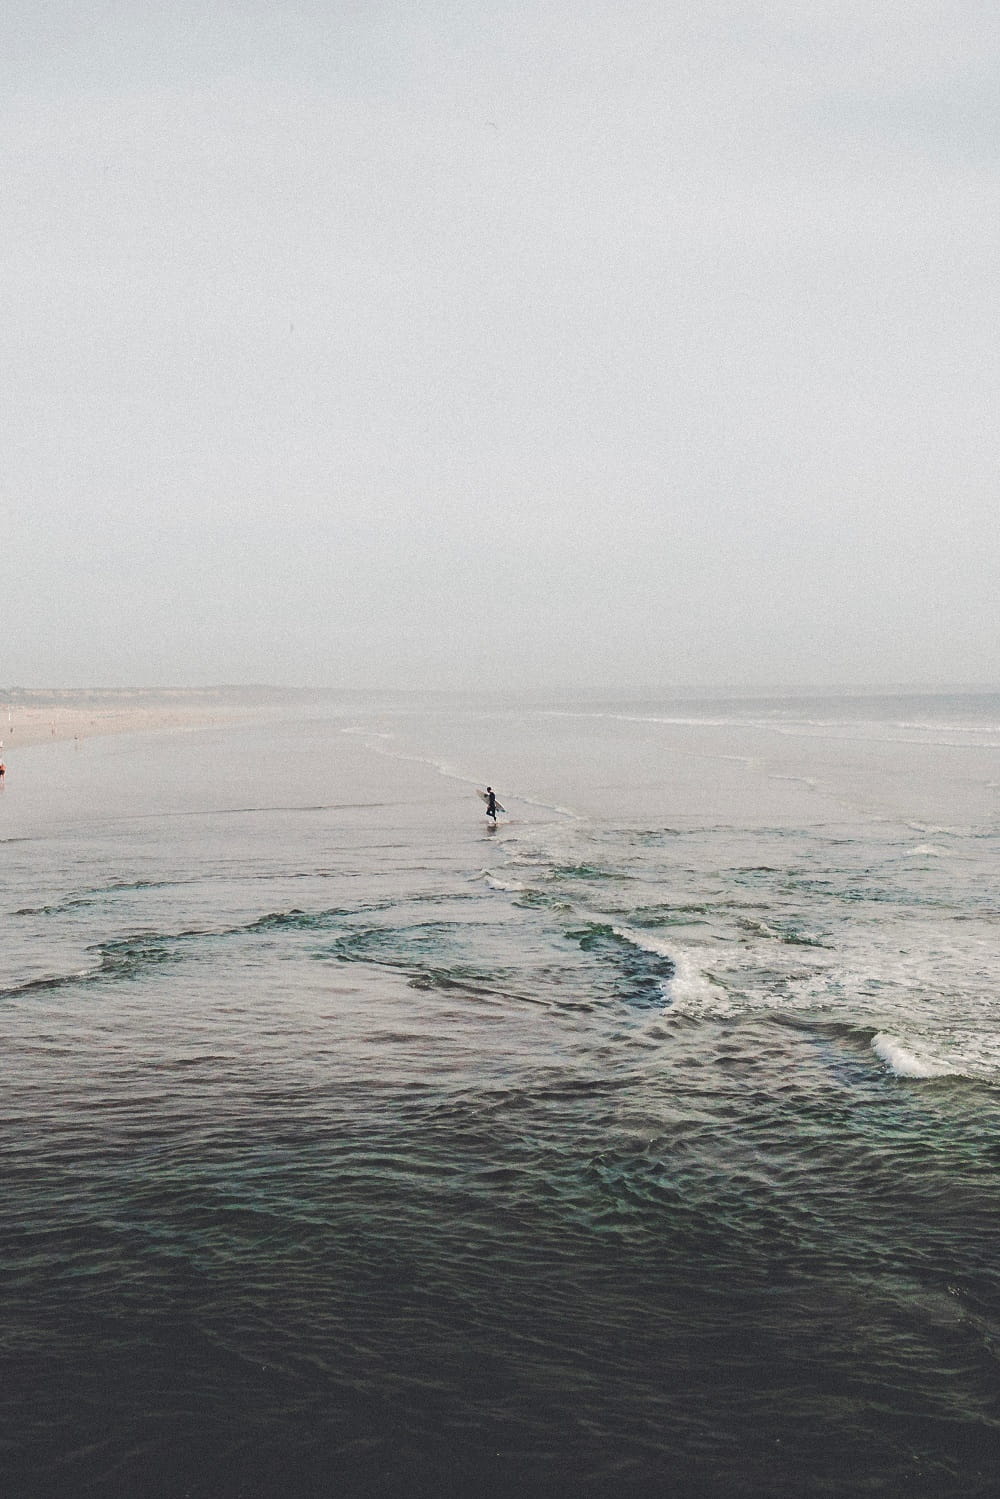 Costa da Caparica Surfing, Portugal - Photographer John Jason